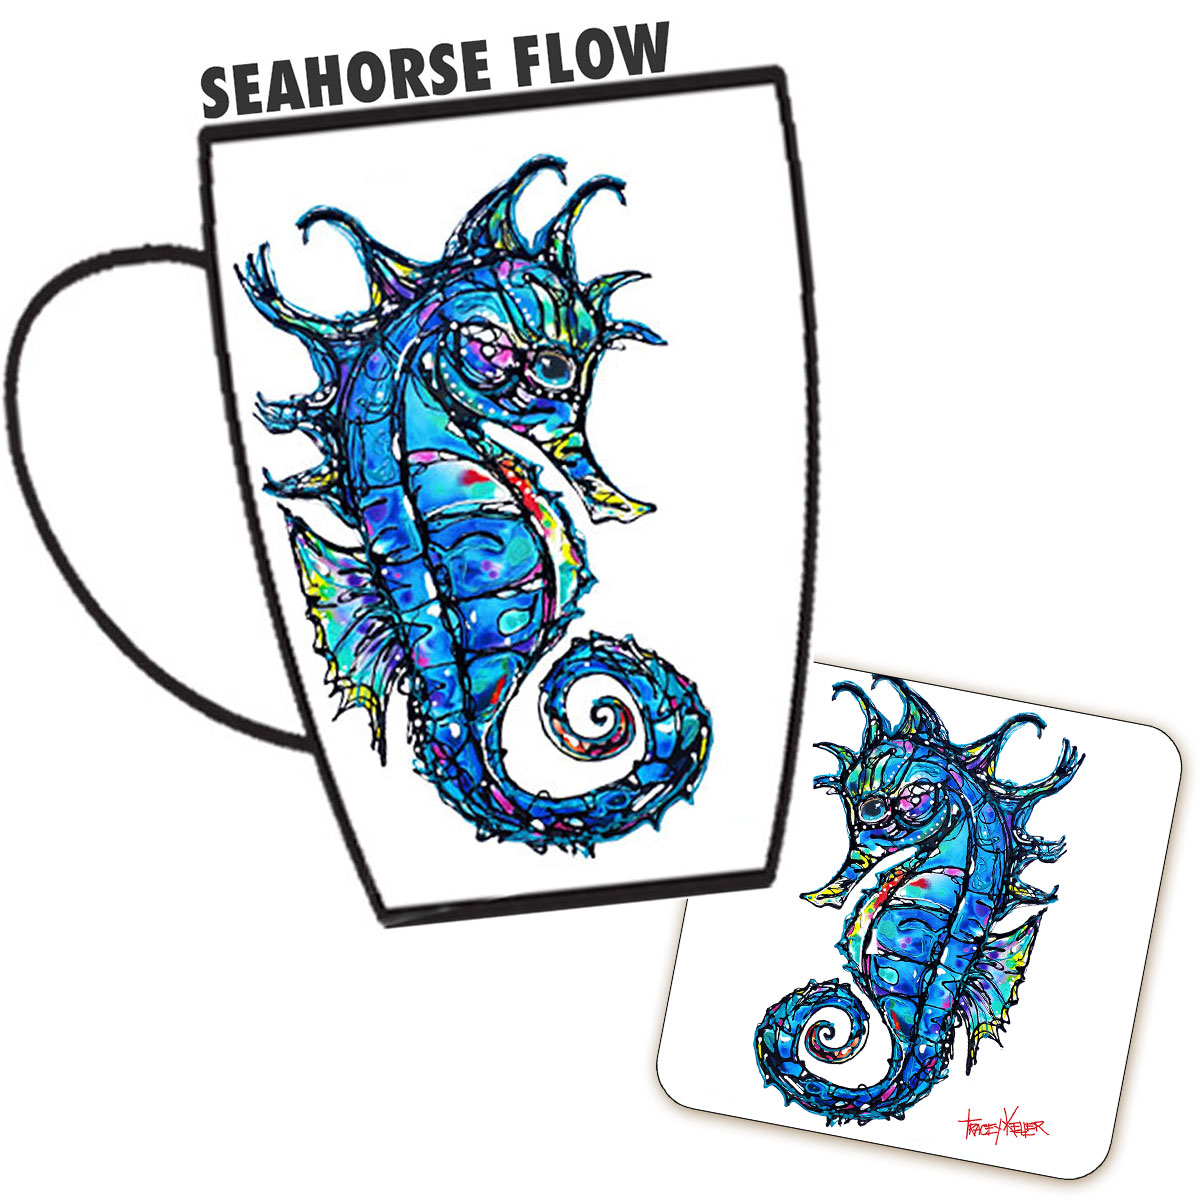 Seahorse Flow